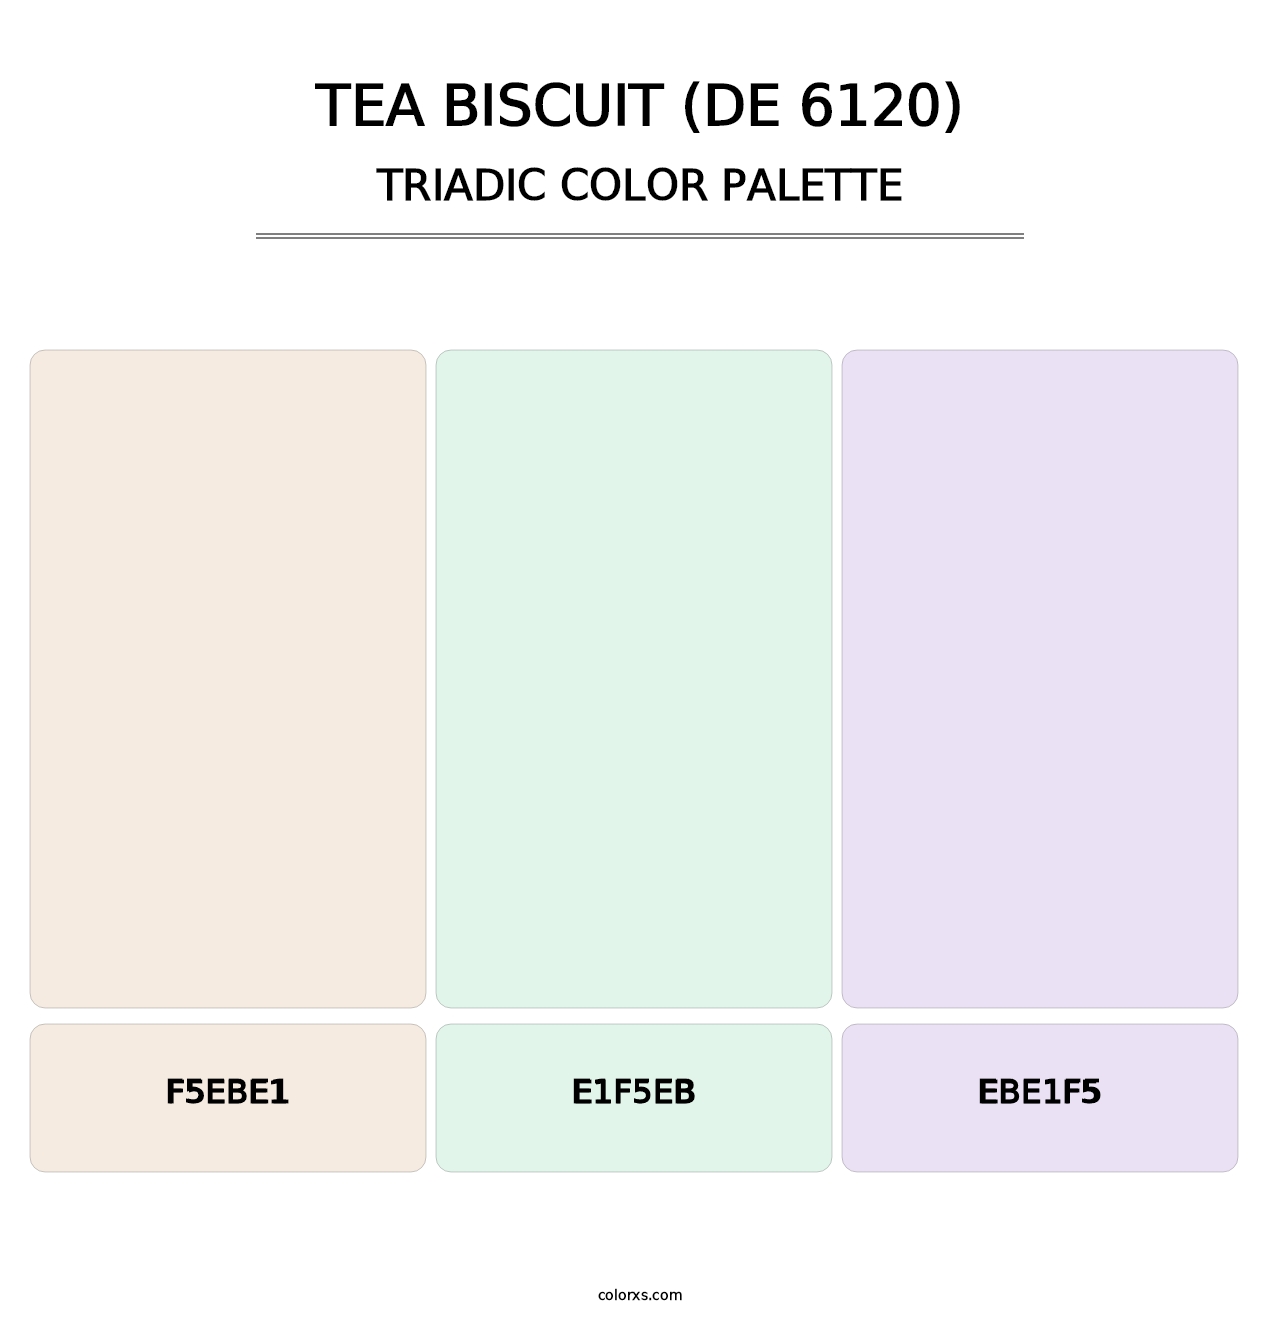 Tea Biscuit (DE 6120) - Triadic Color Palette